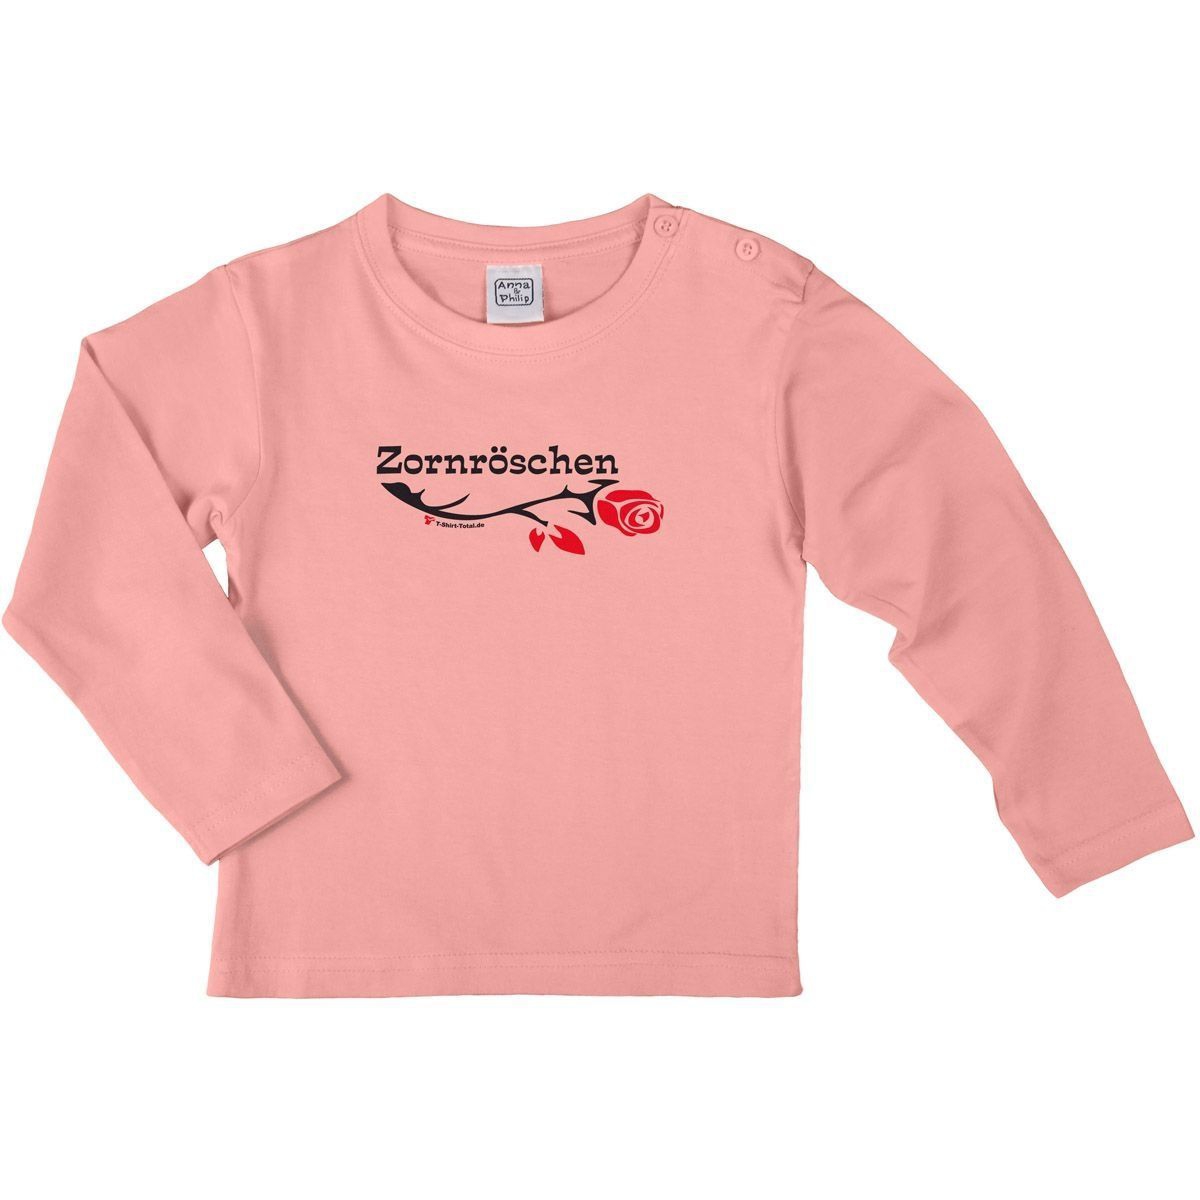 Zornröschen Kinder Langarm Shirt rosa 104